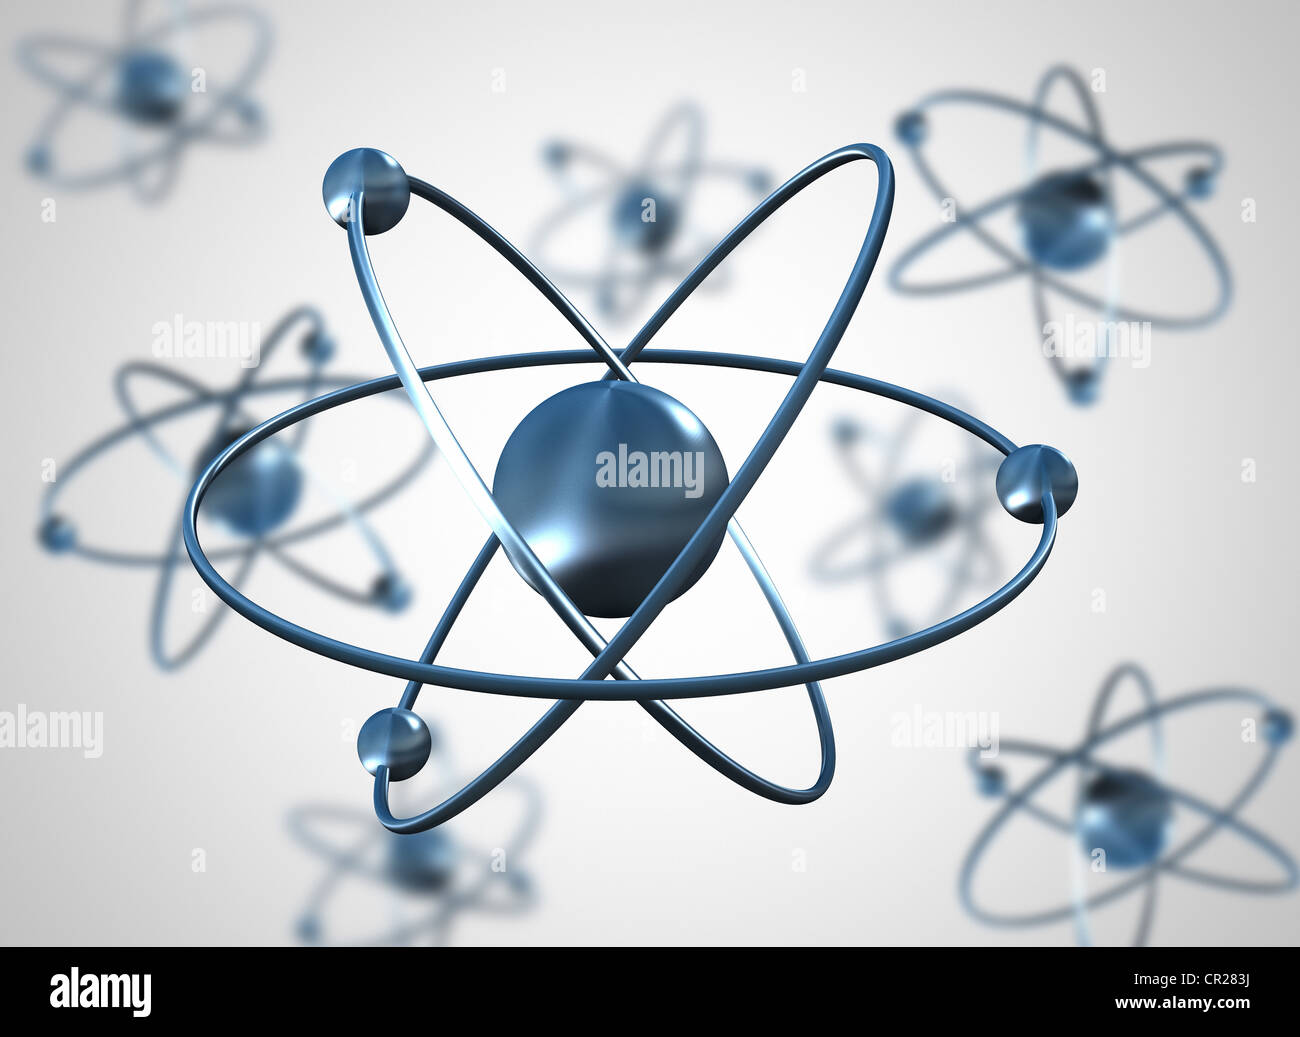 Atoms science background Stock Photo - Alamy